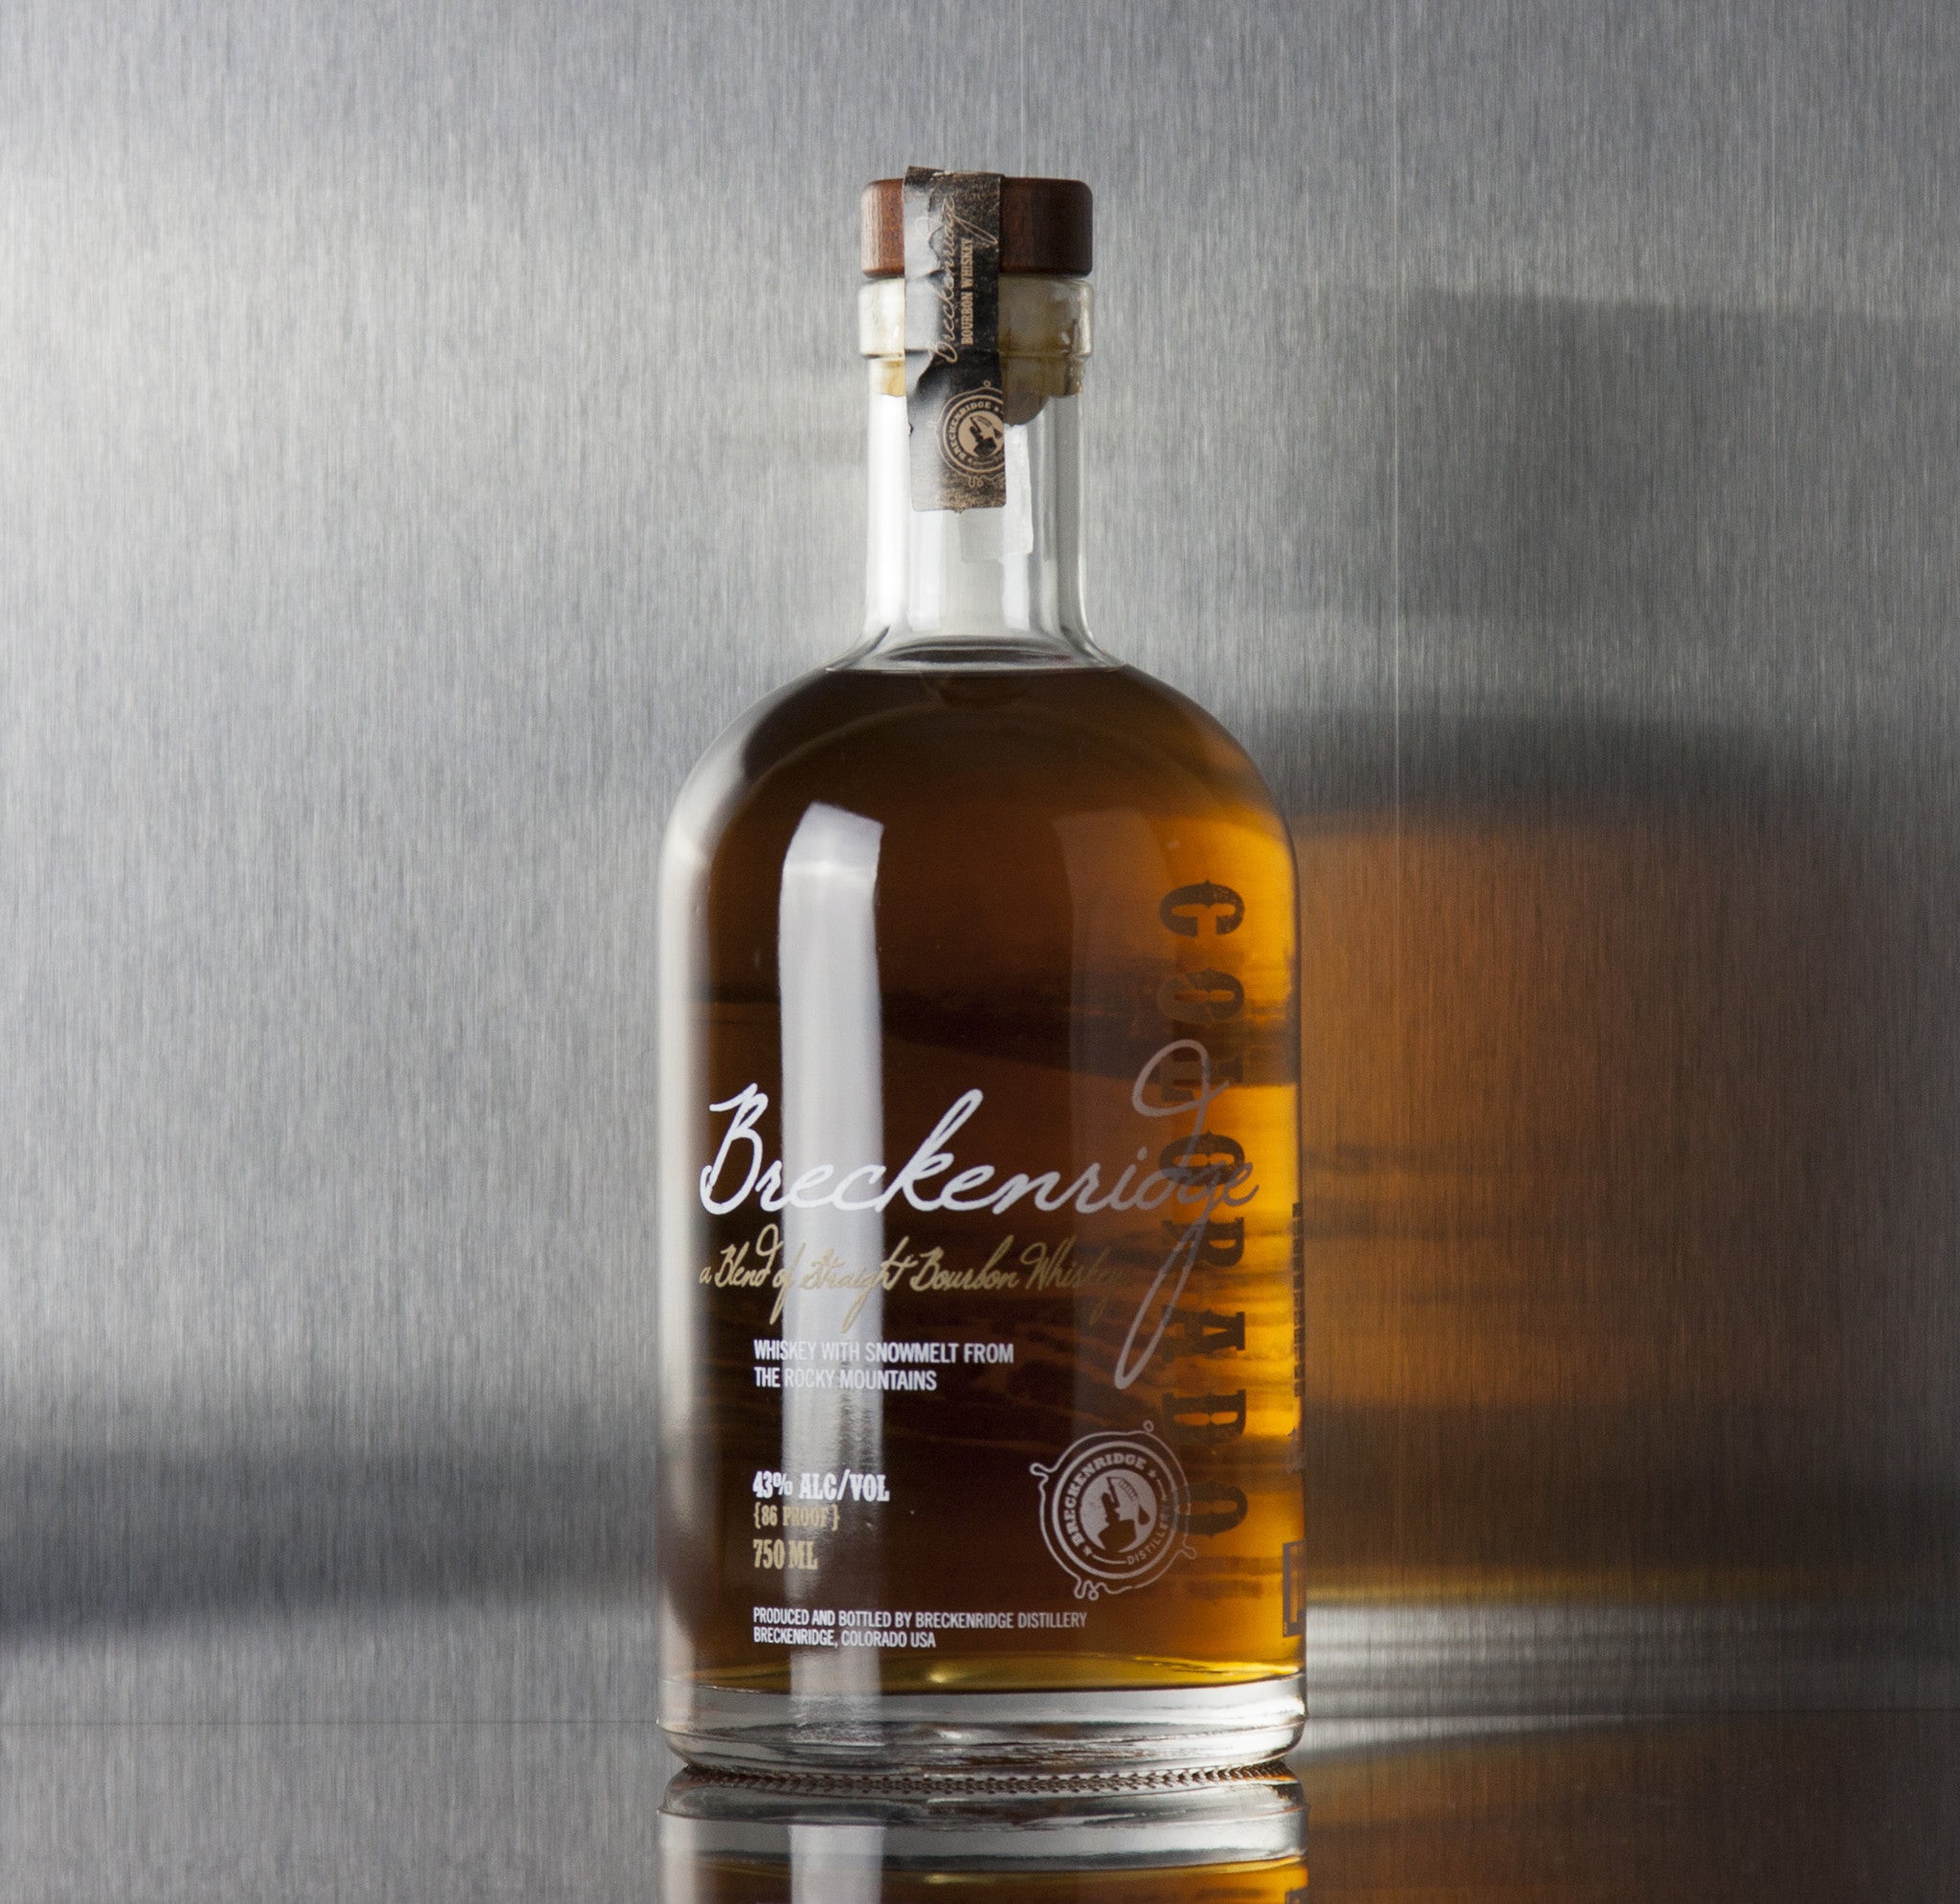 Breckenridge Bourbon 750 ml